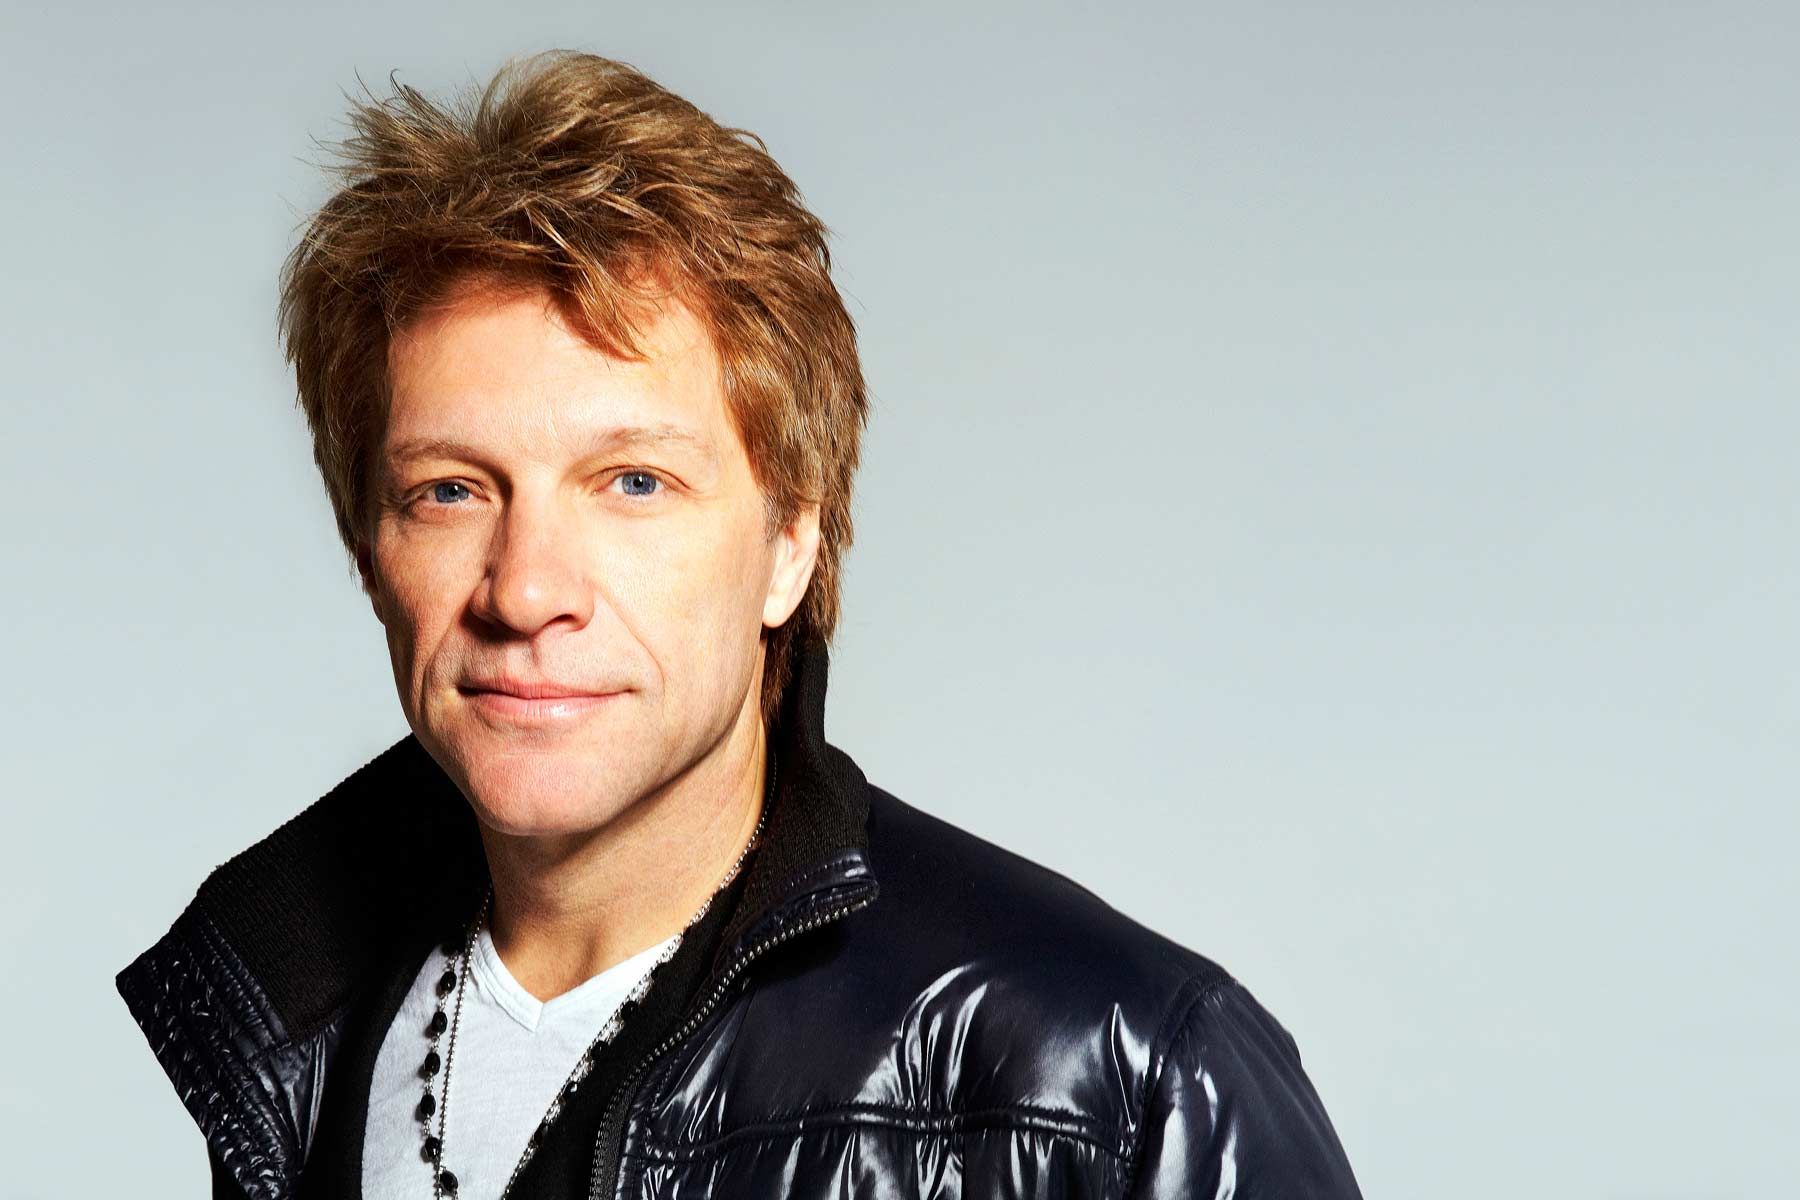 Jon Bon Jovi is 55 today, born 2 March 1962.
Lead singer & founder member of Bon Jovi in 1983. 
Happy Birthday Jon! 